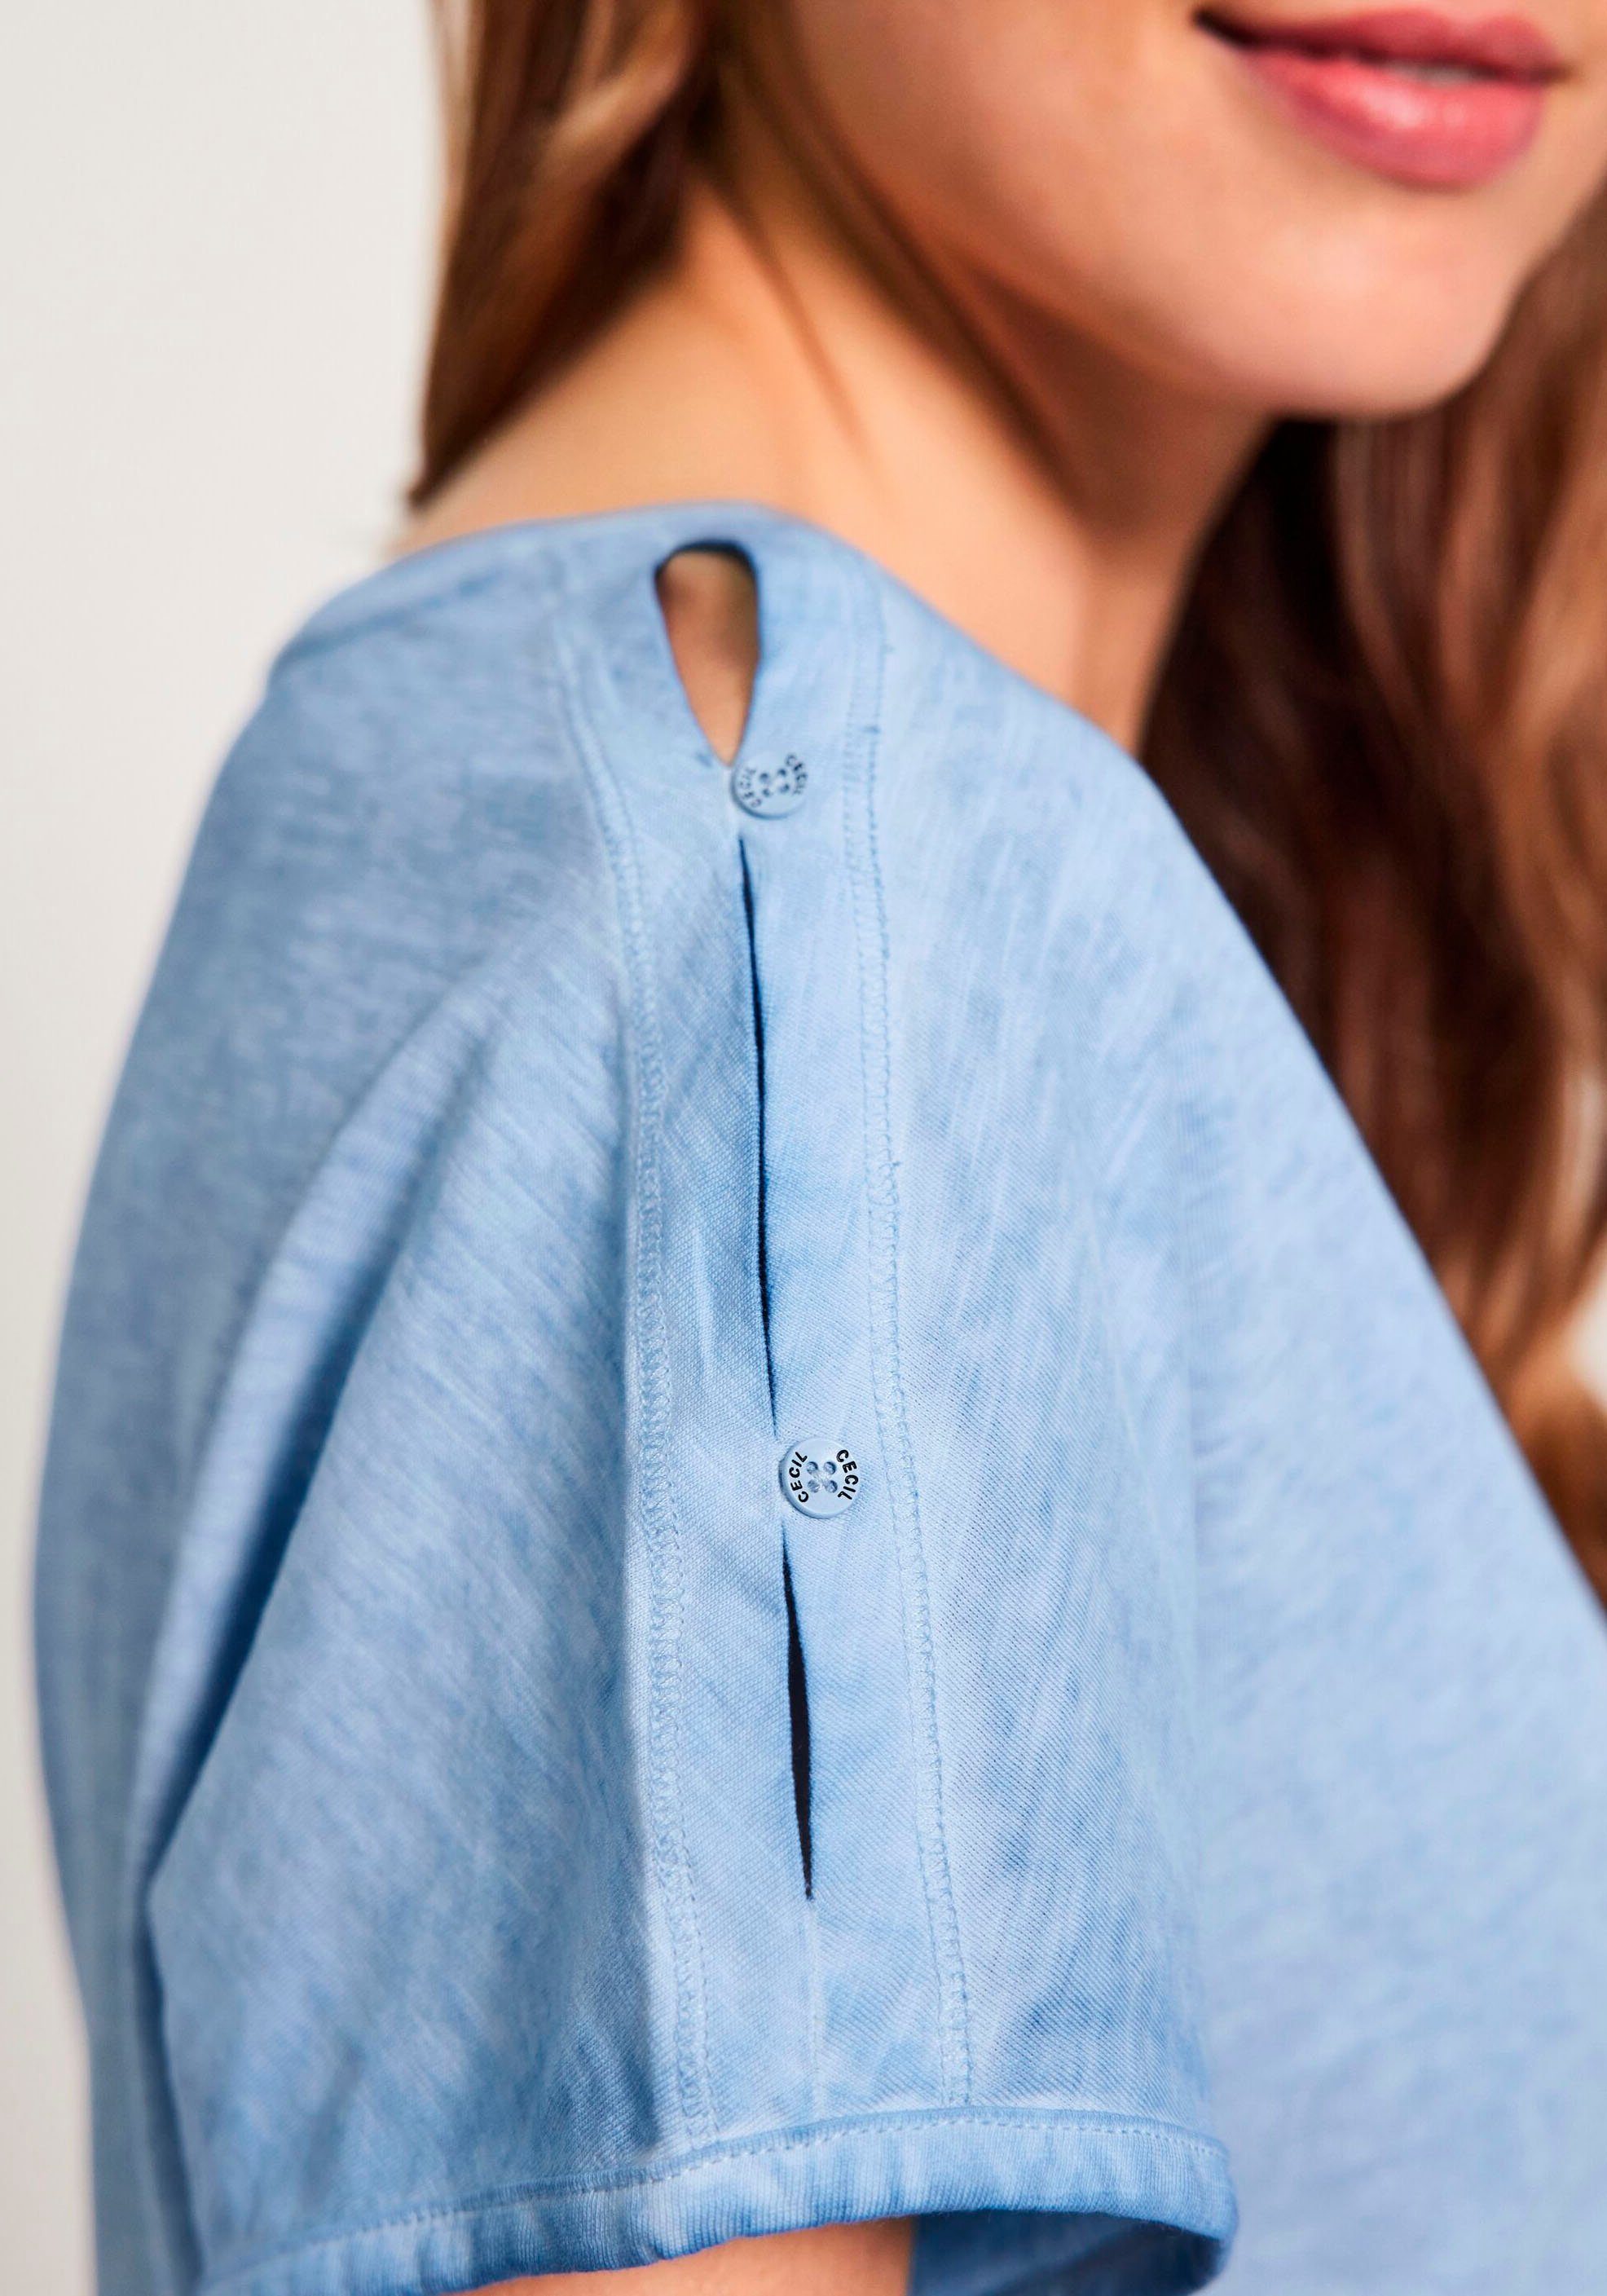 an Cut-Outs Cecil T-Shirt himmelblau mit Schultern den